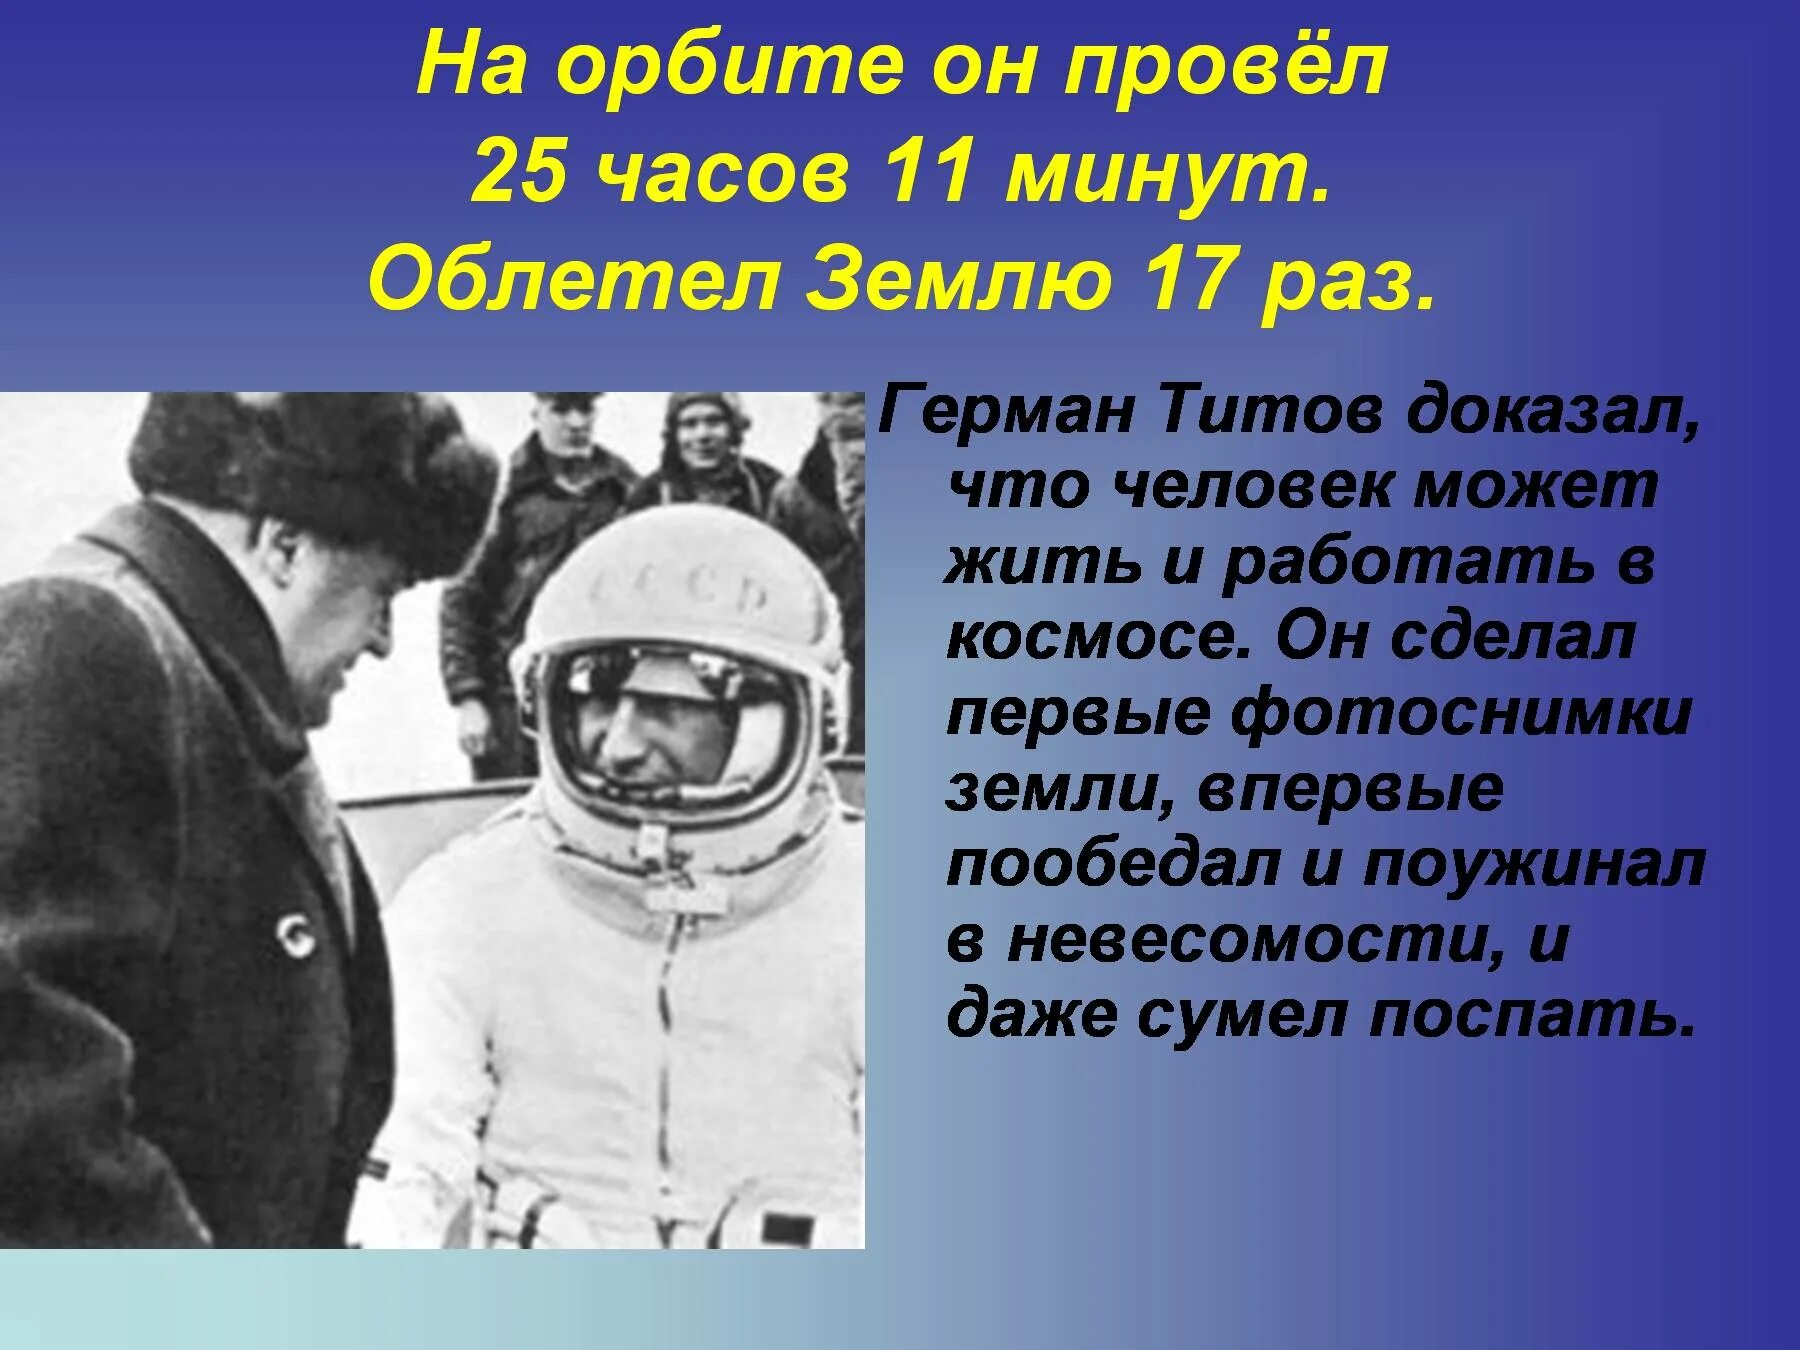 Титов космонавт презентация.